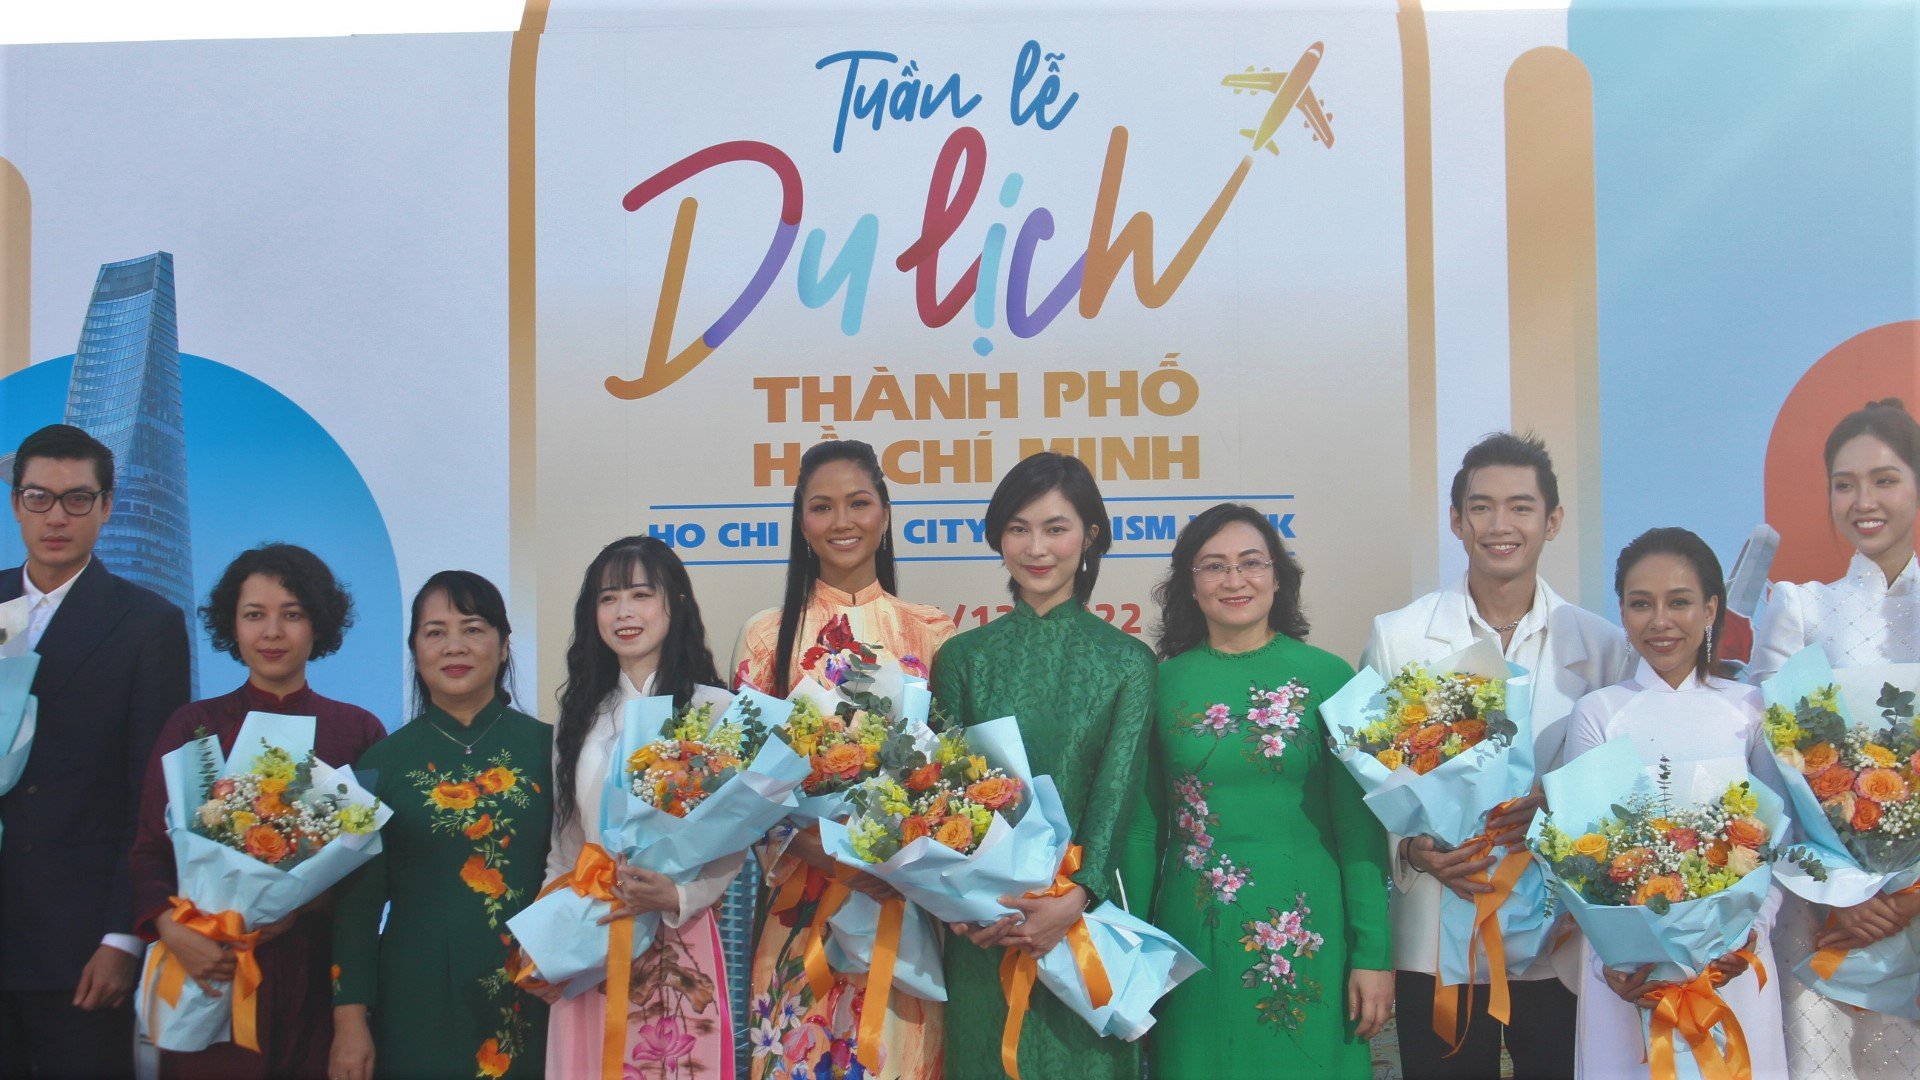 Hoa hau HHen Nie bien dao mua Quang Dang ca si Thao Trang. la 3 trong so 22 guong mat dai su cua Tuan le du lich TP.HCM nam 2022.jpg